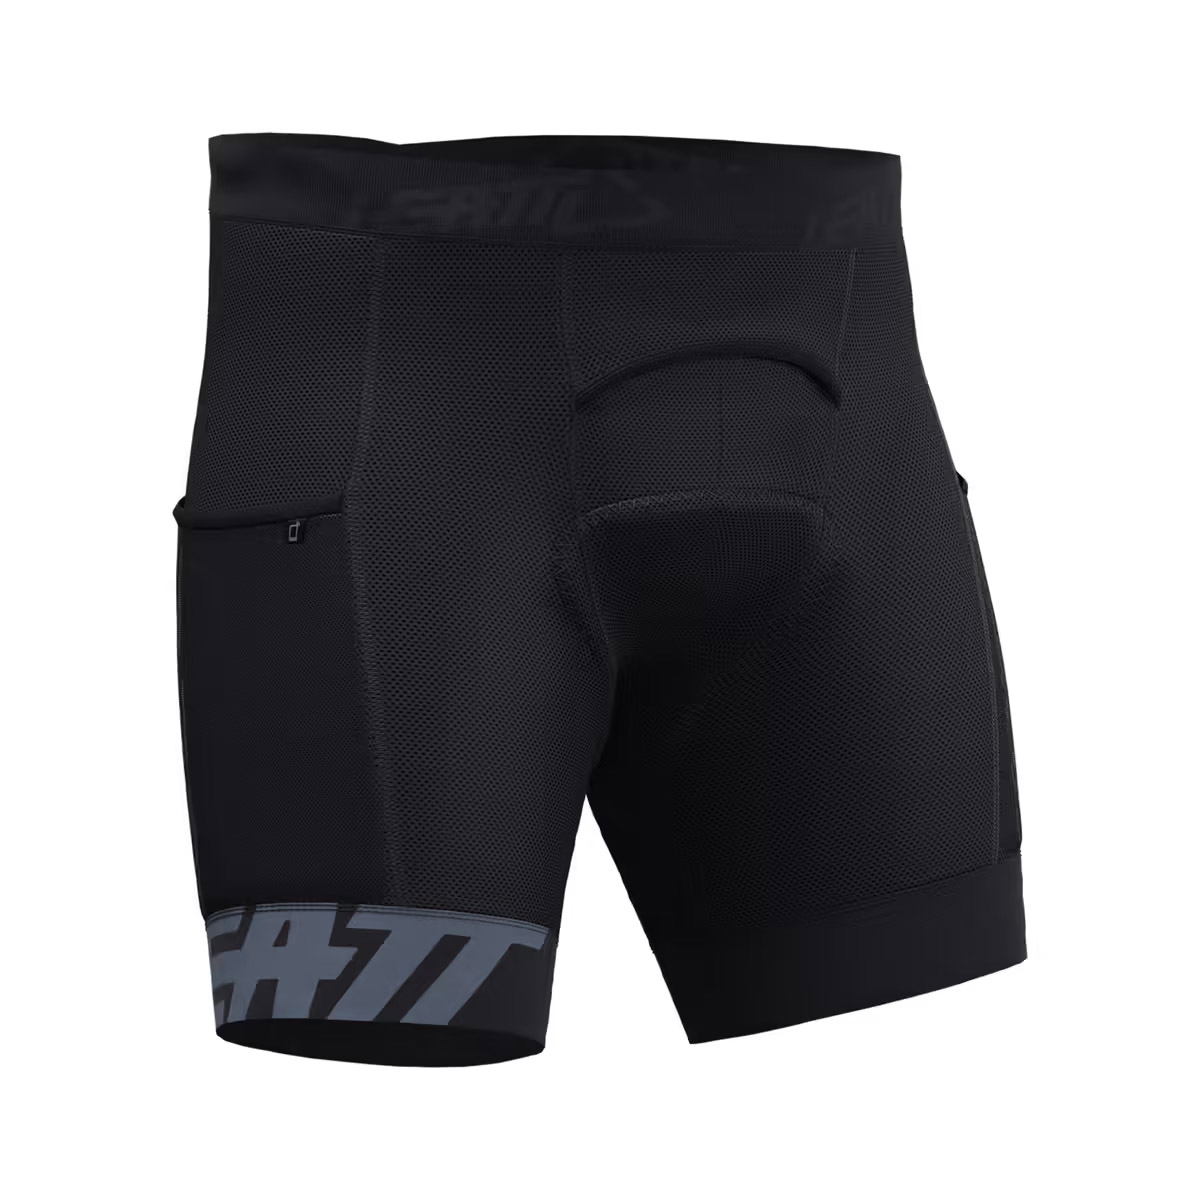 Liner MTB 3.0 protective underwear shorts black size XS (46)